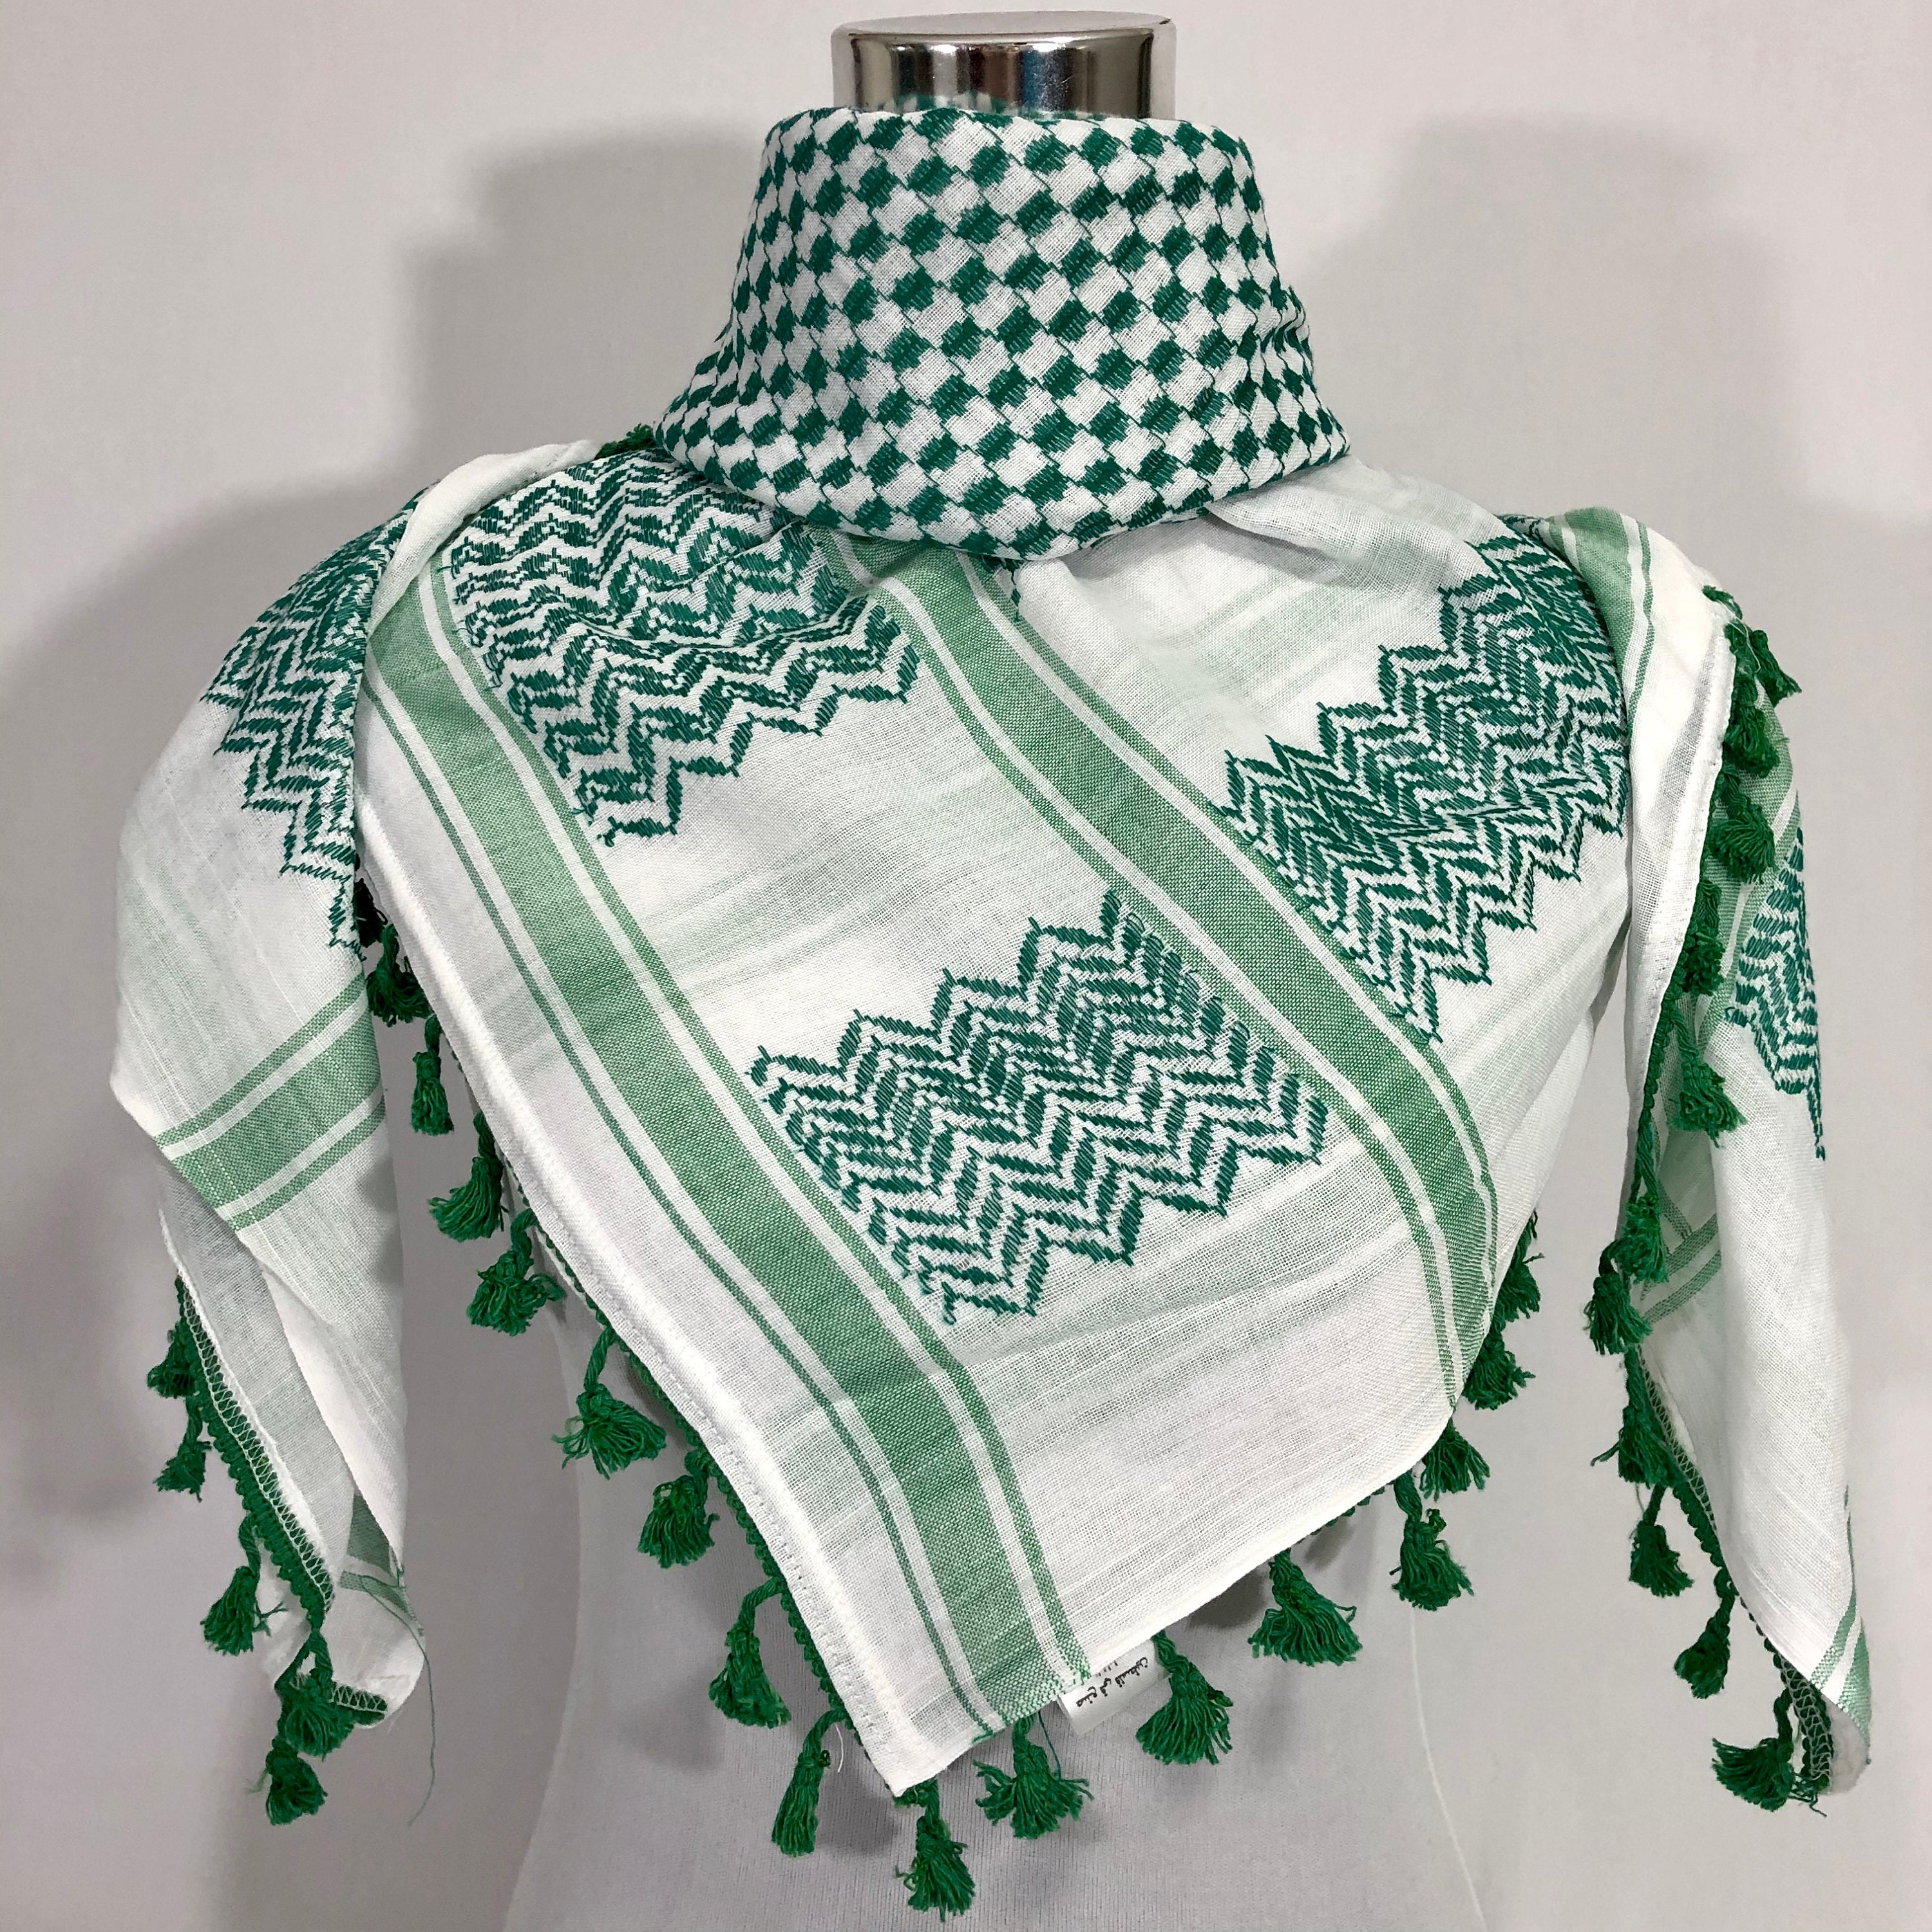 Original Palestine-Made Keffiyeh in Traditional Reversed Style